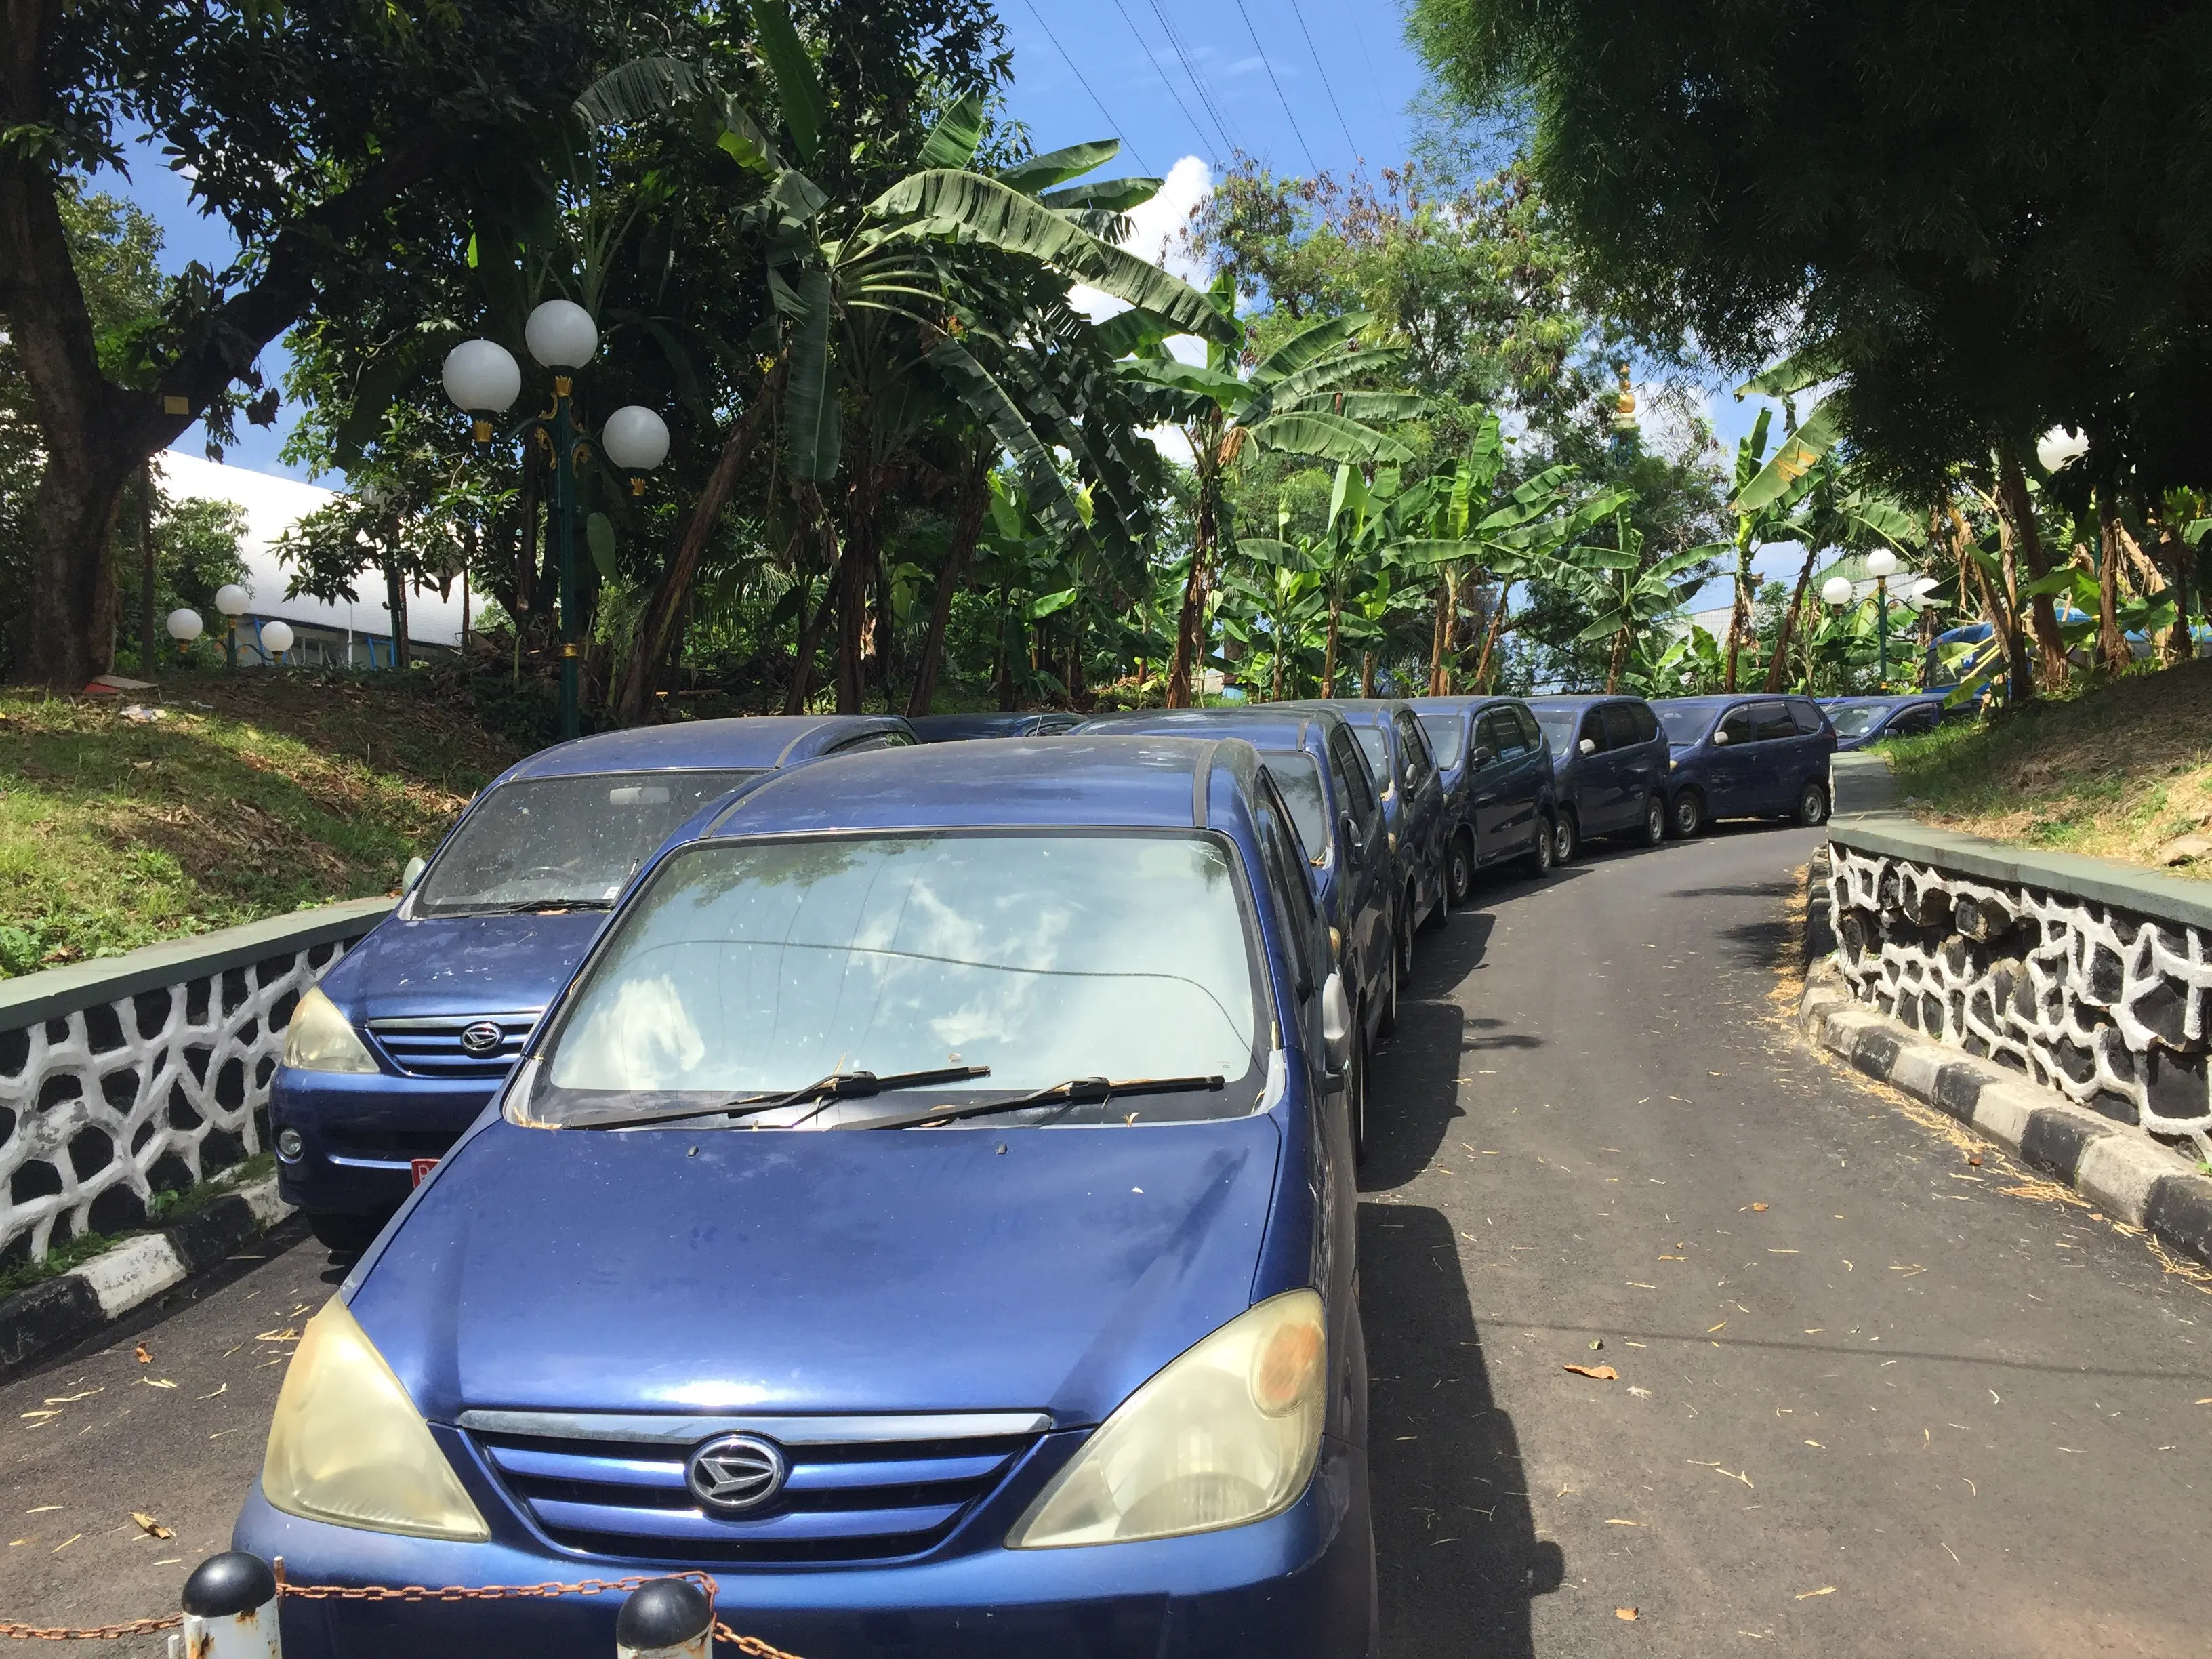 Puluhan mobil berpelat merah terparkir tanpa perawatan di halaman belakang Gedung DPR. (Liputan6.com/Devira Prastiwi)